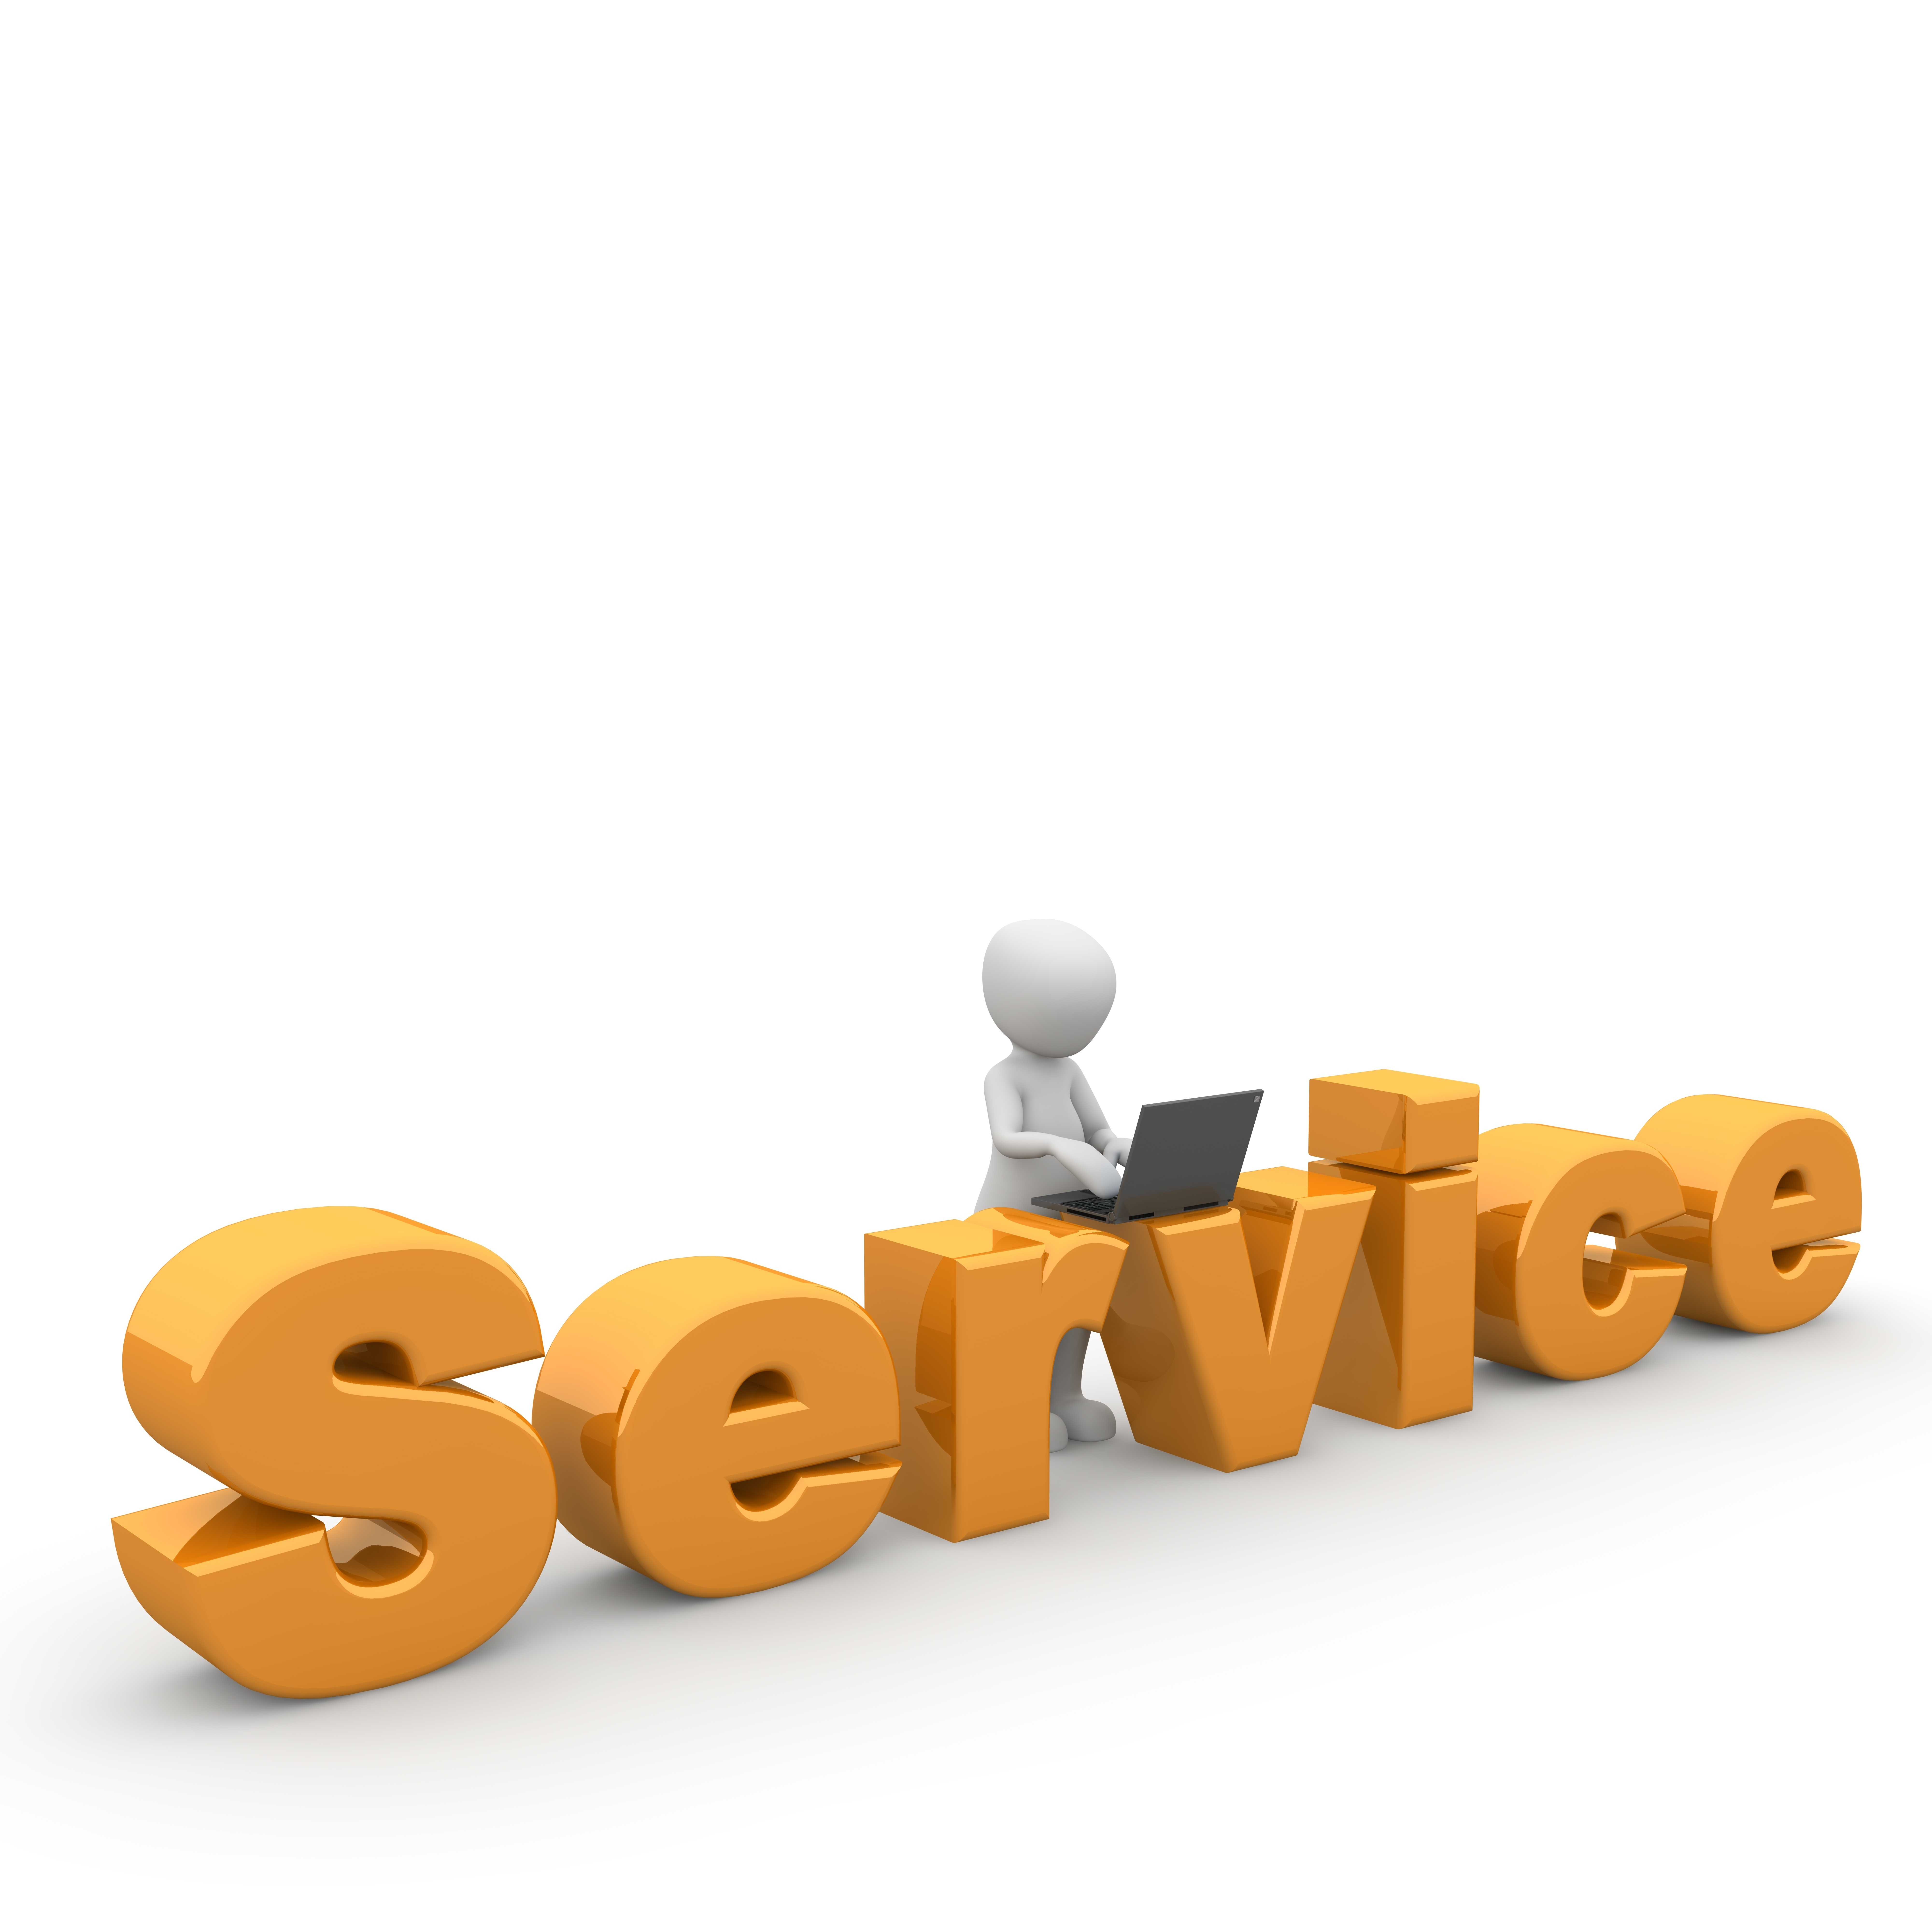 Customer Service Part 1 Why Focus on Good Service? Detroit Sponge